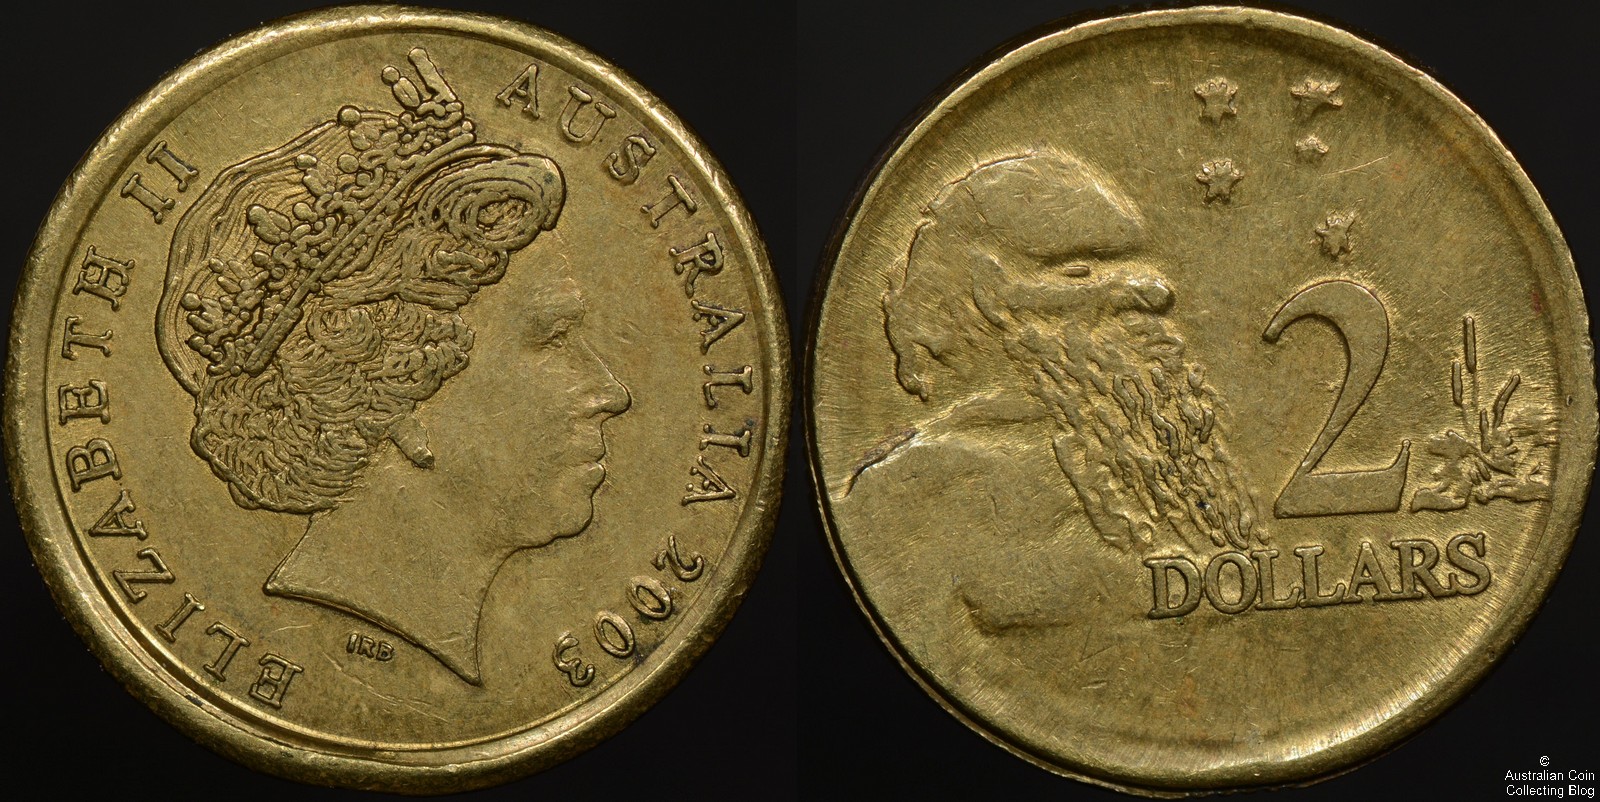 Australia 2003 2 Dollar Counterfeit Coin